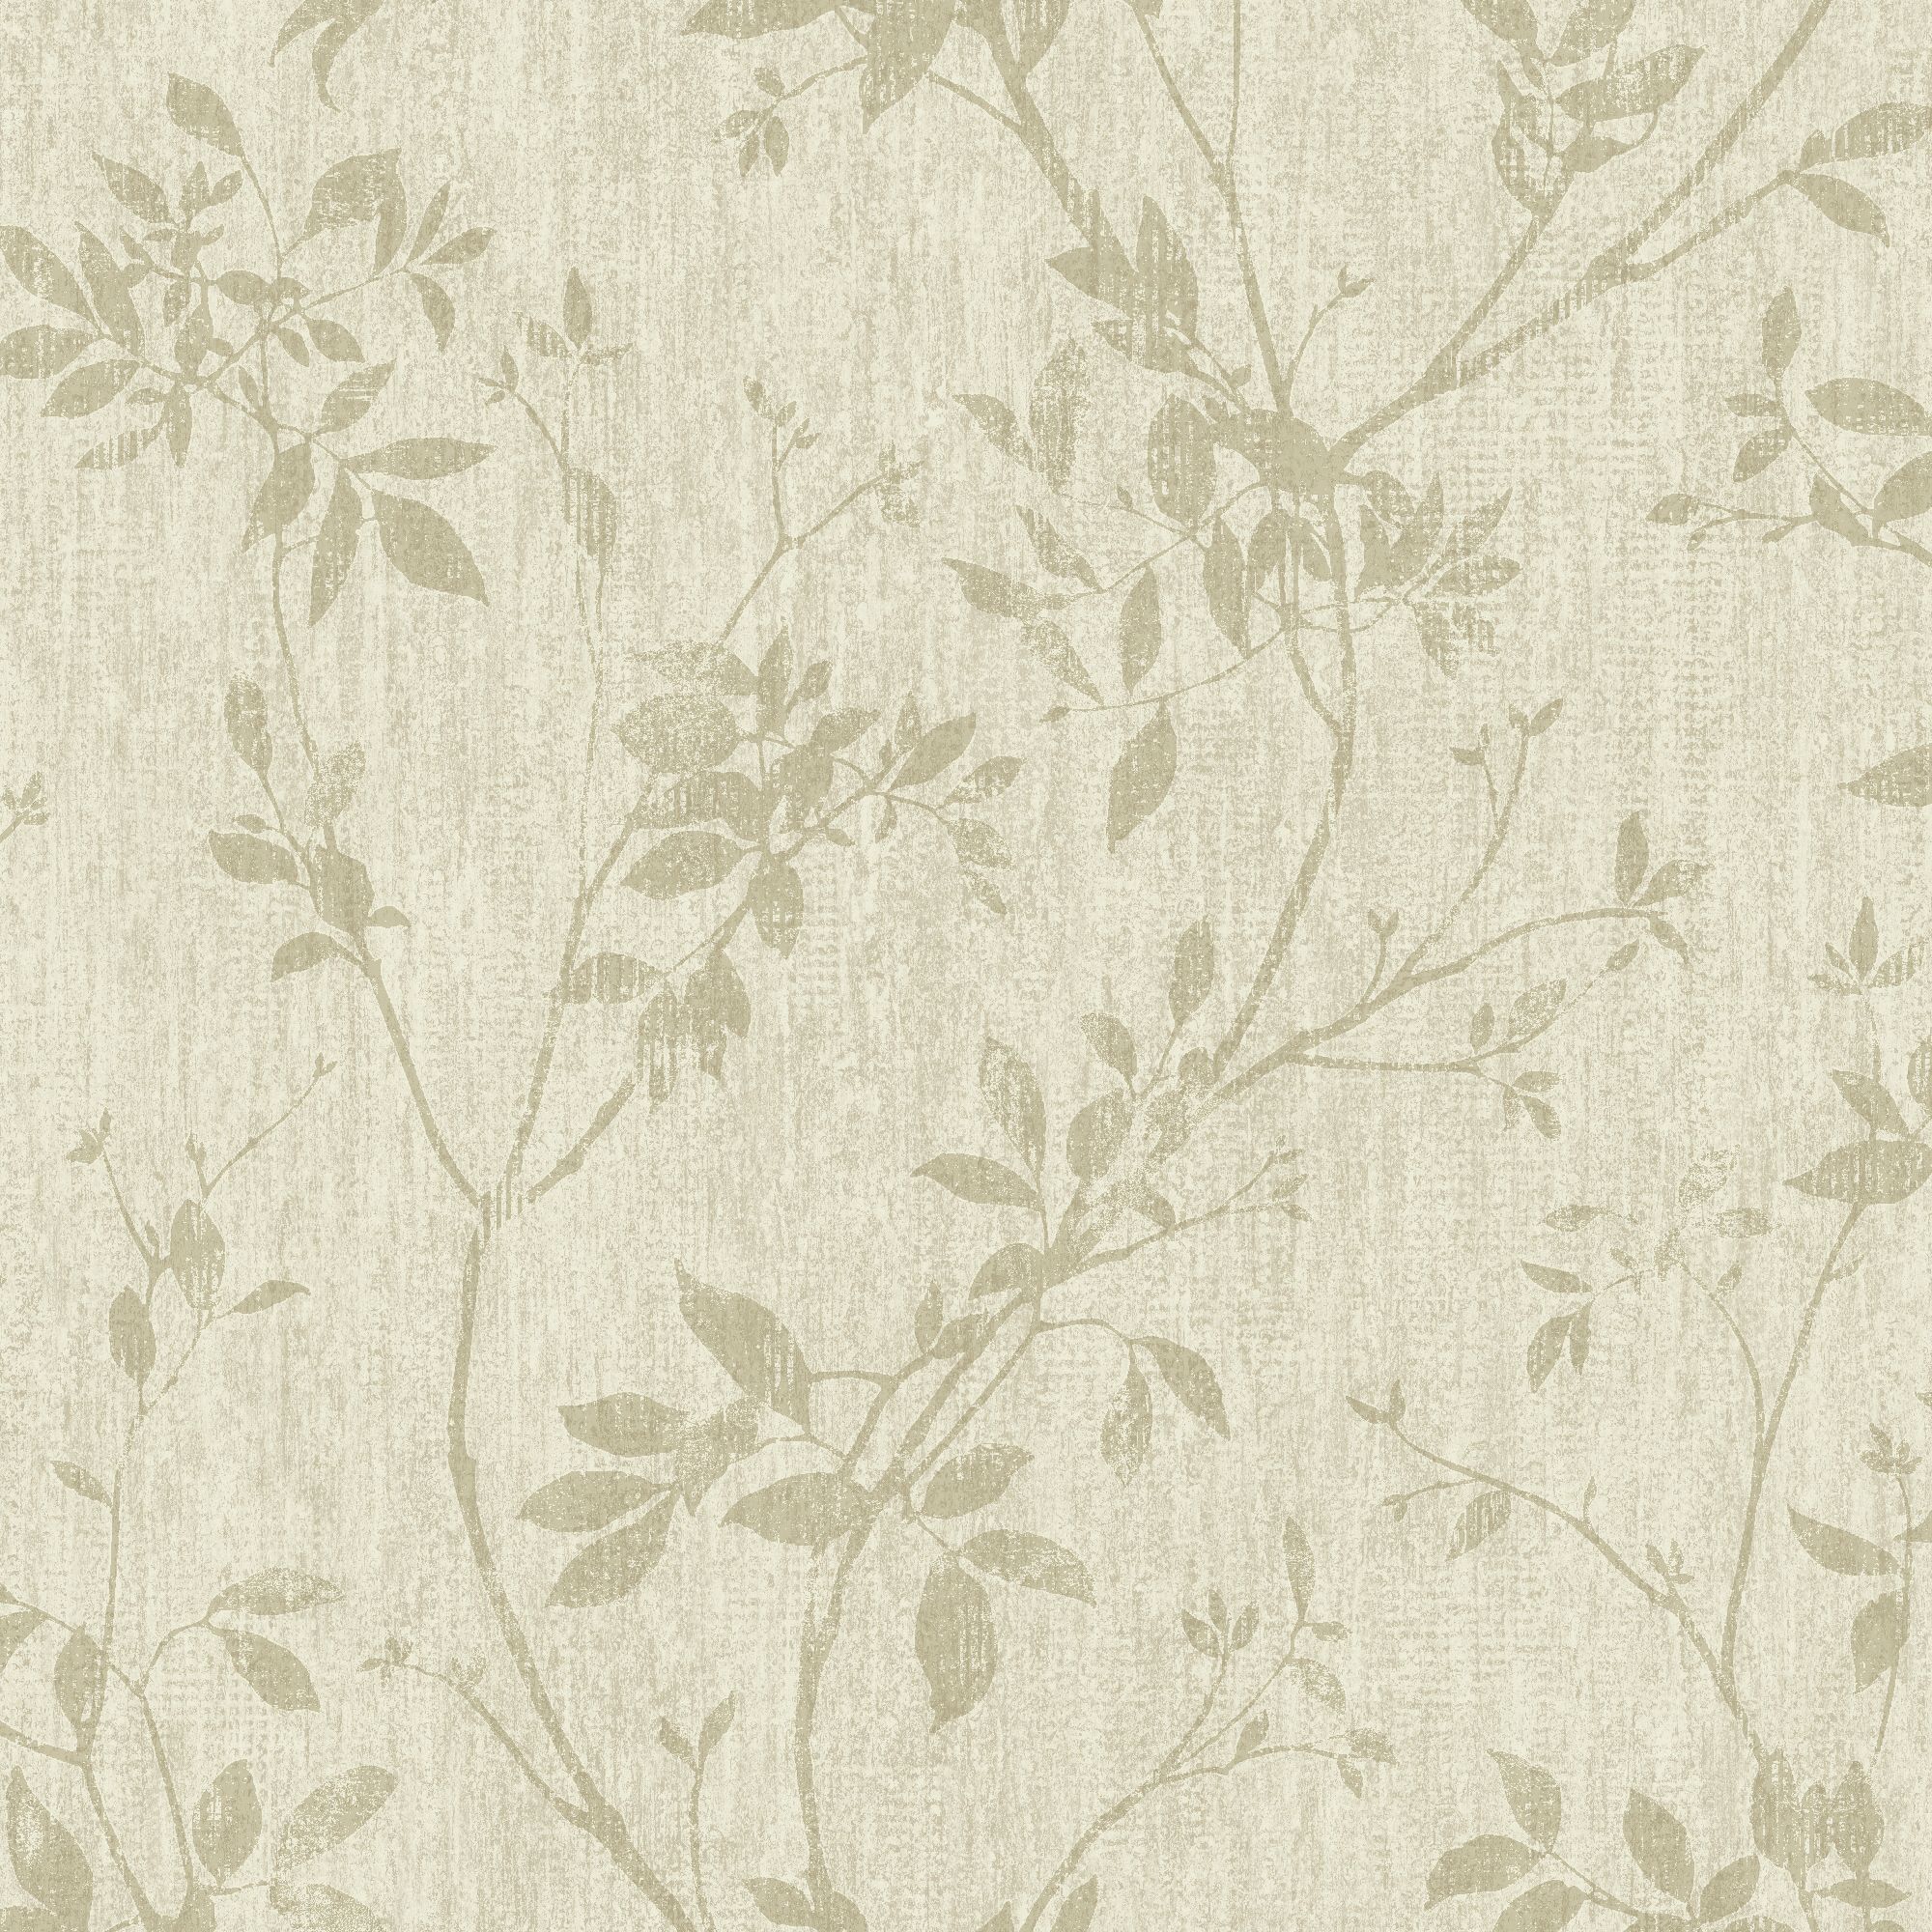 GoodHome Hirta Beige Floral Metallic effect Textured Wallpaper Sample